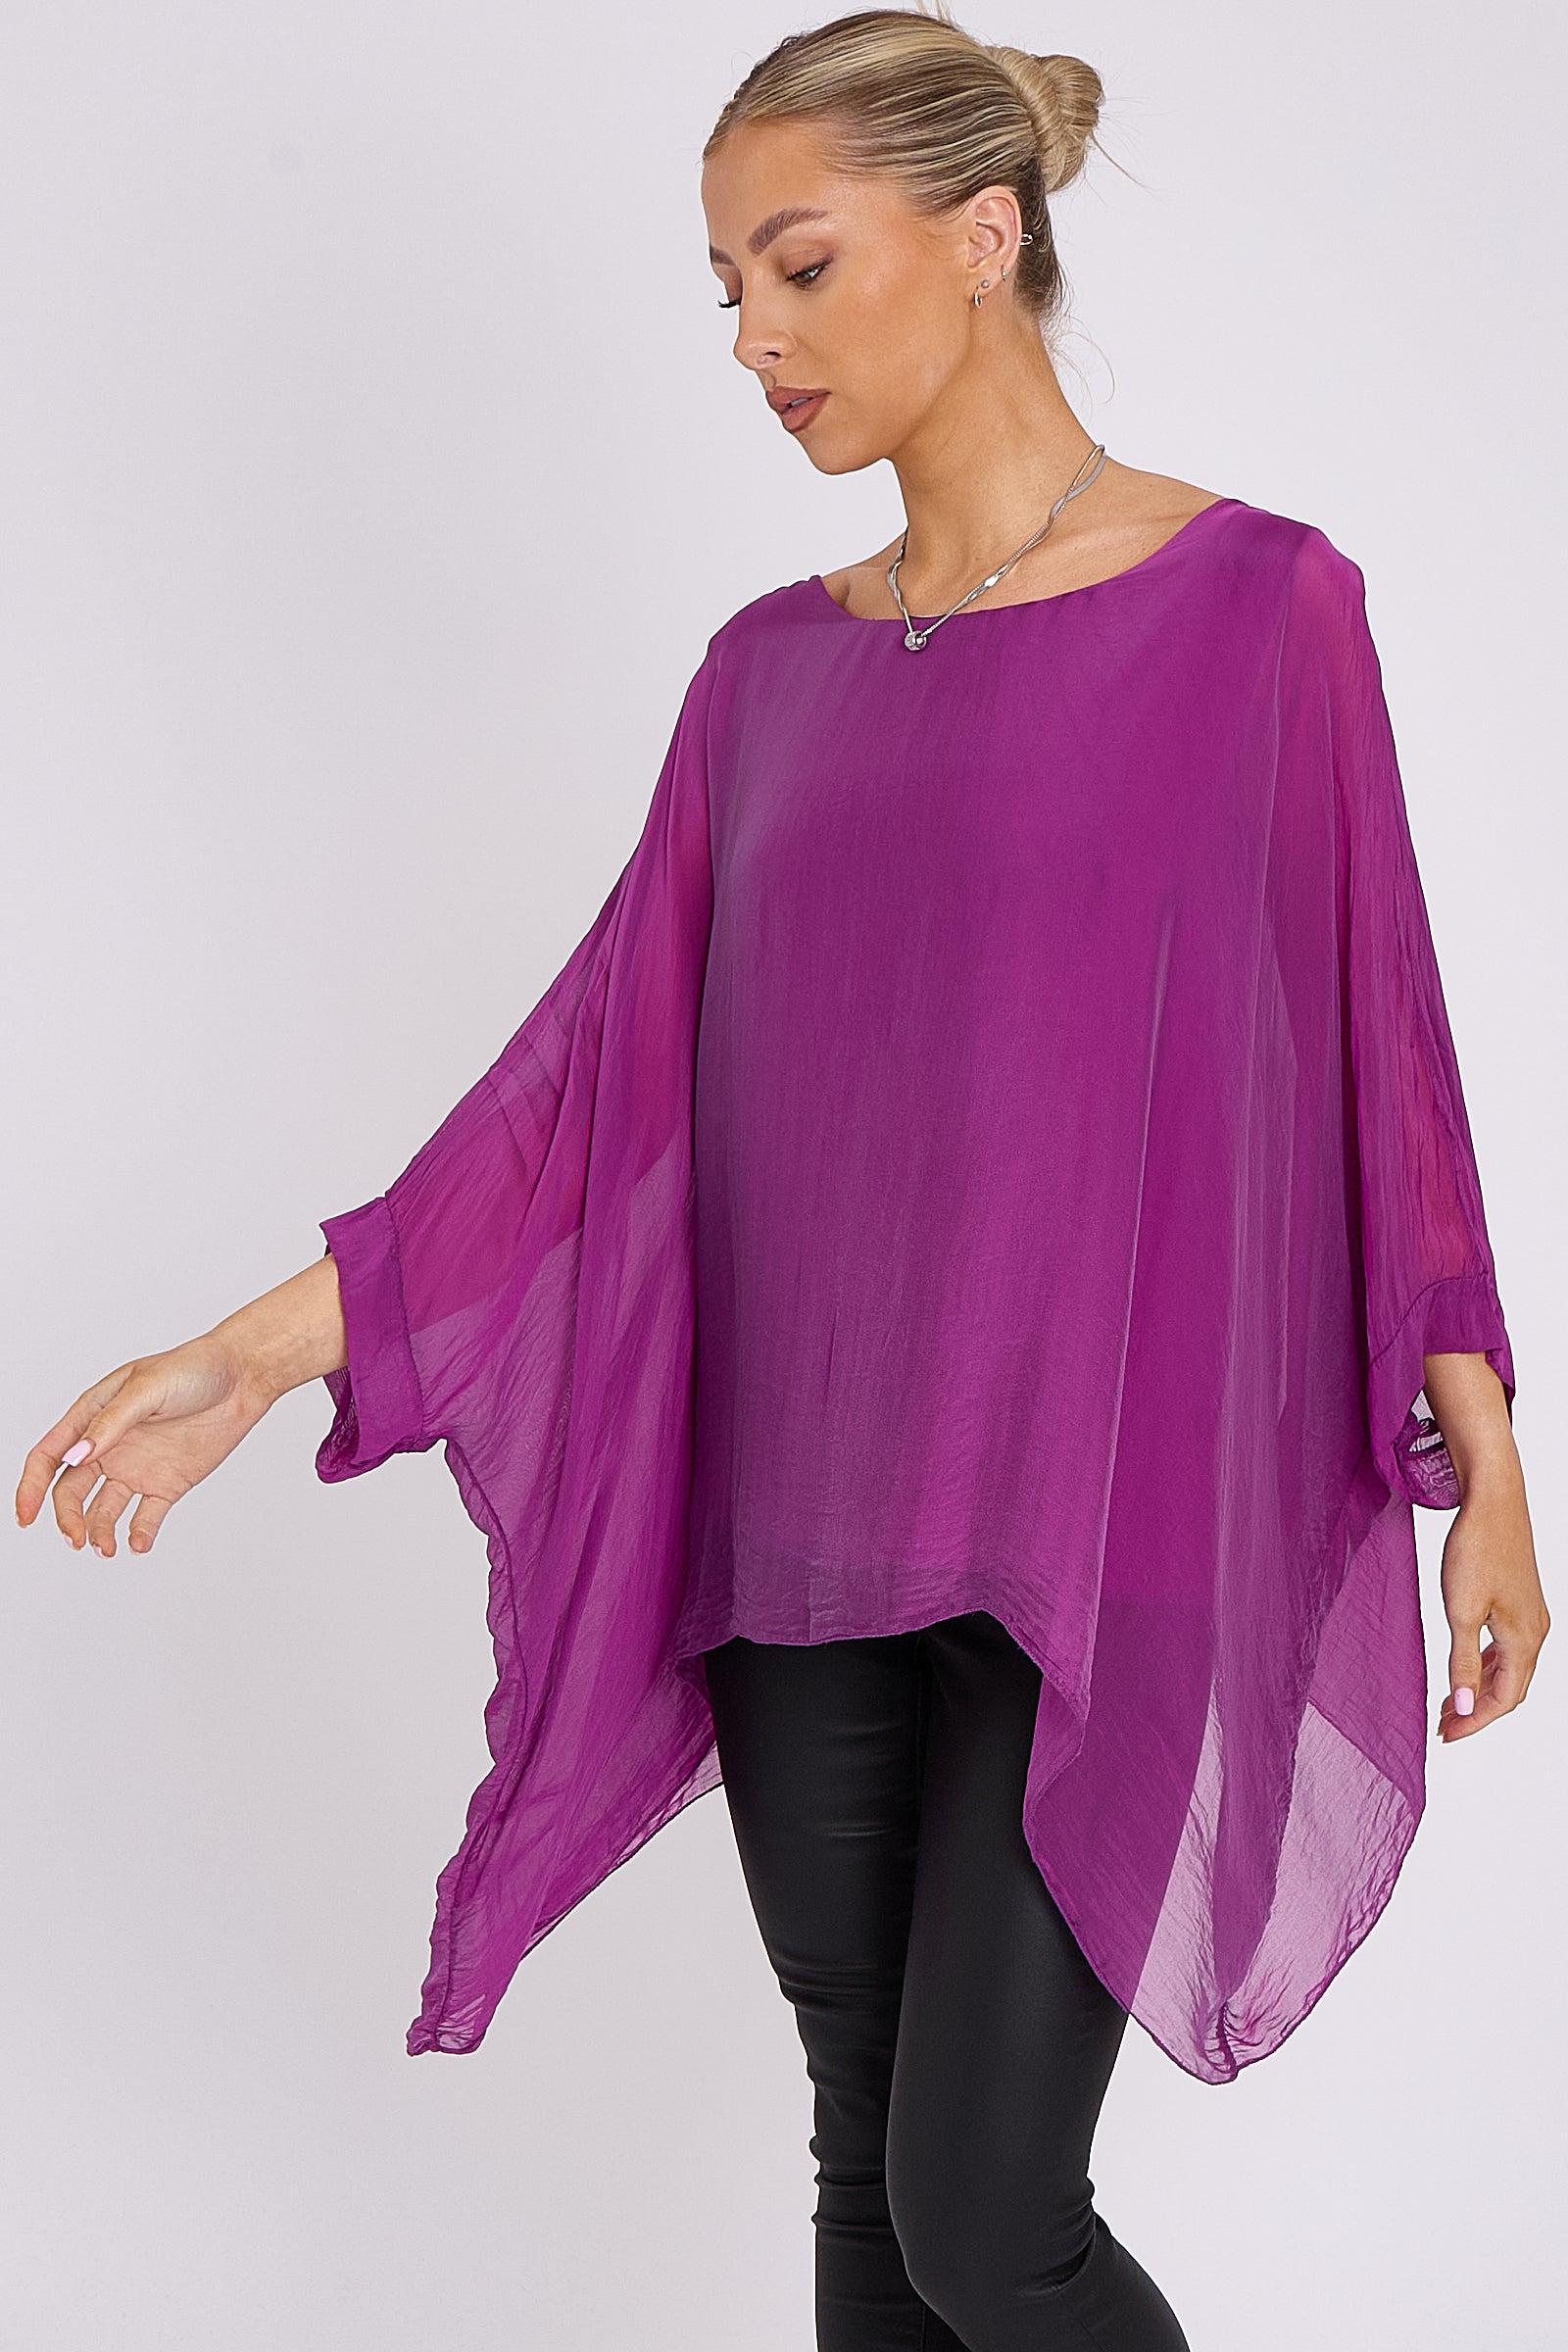 Purple Silk Batwing Sleeve Top Blouse JASMINE